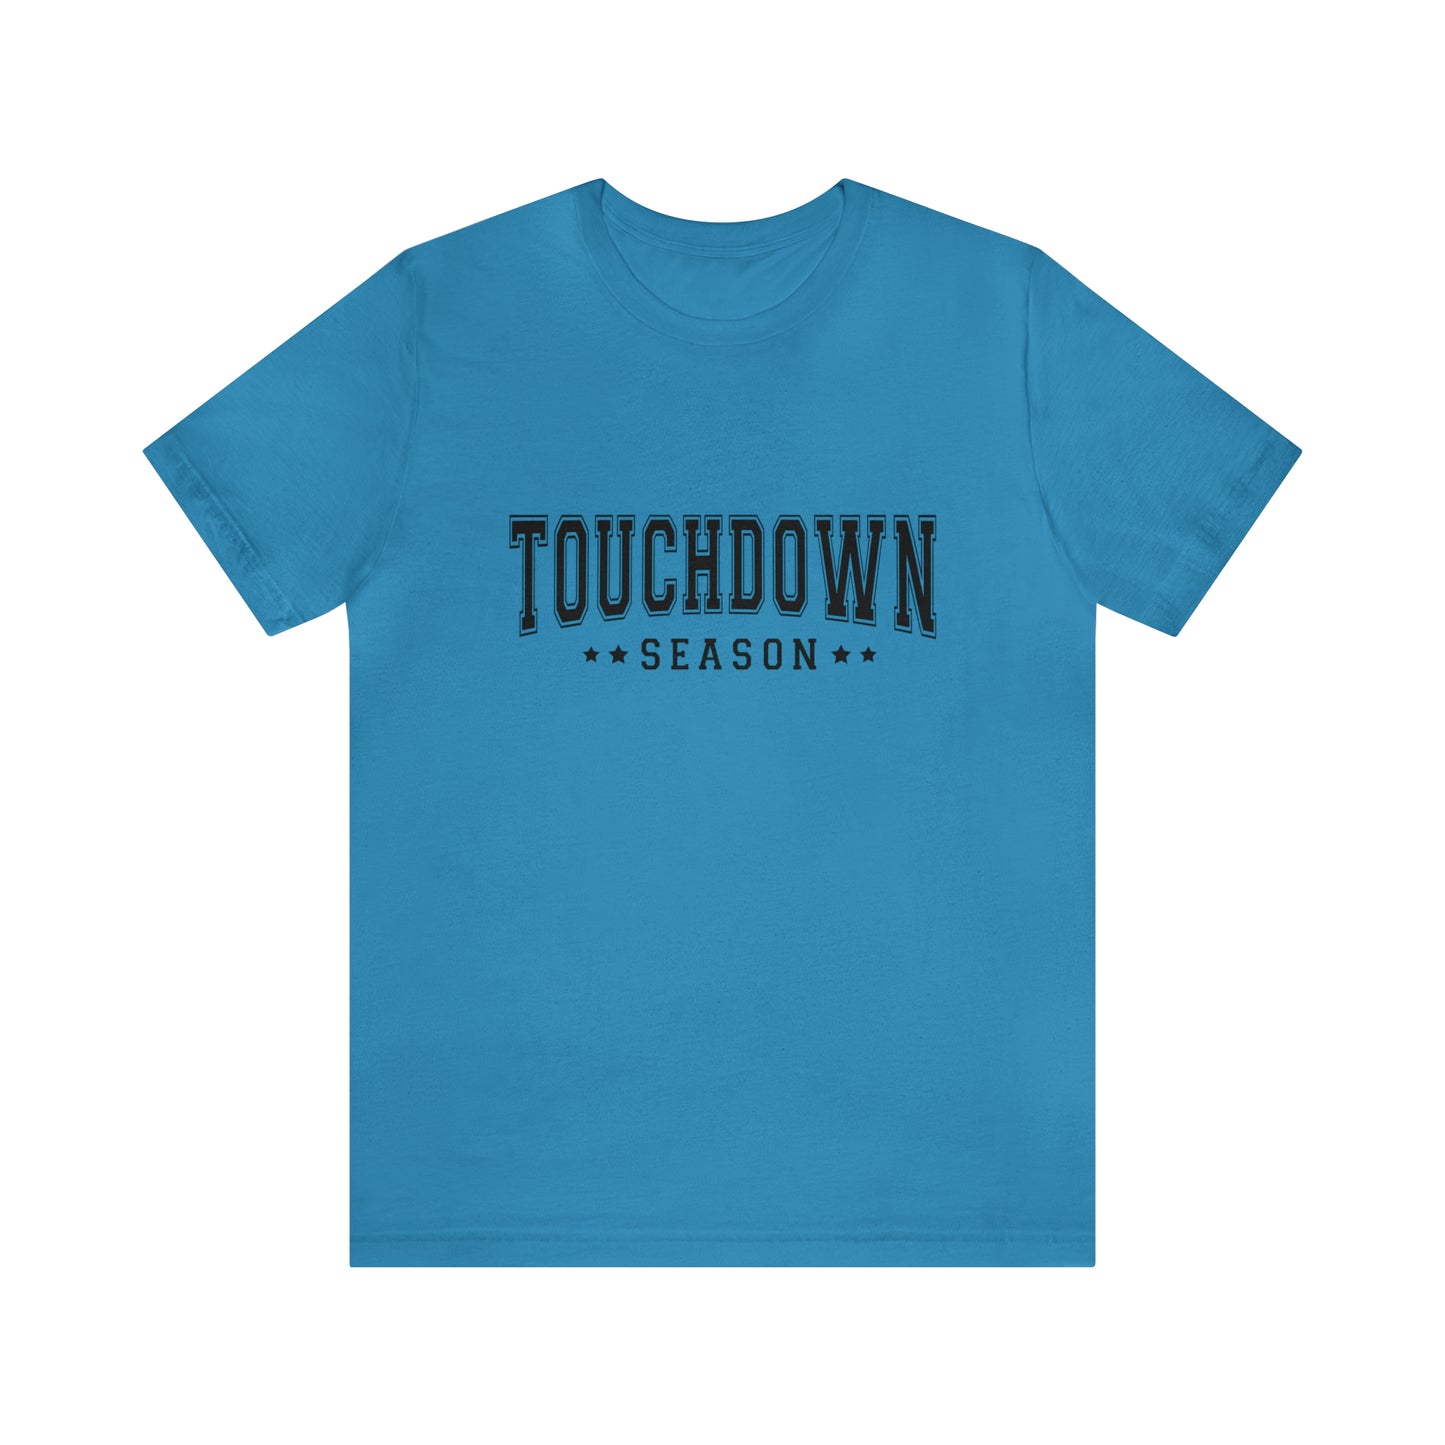 Touchdown Season - Short Sleeve T-Shirt